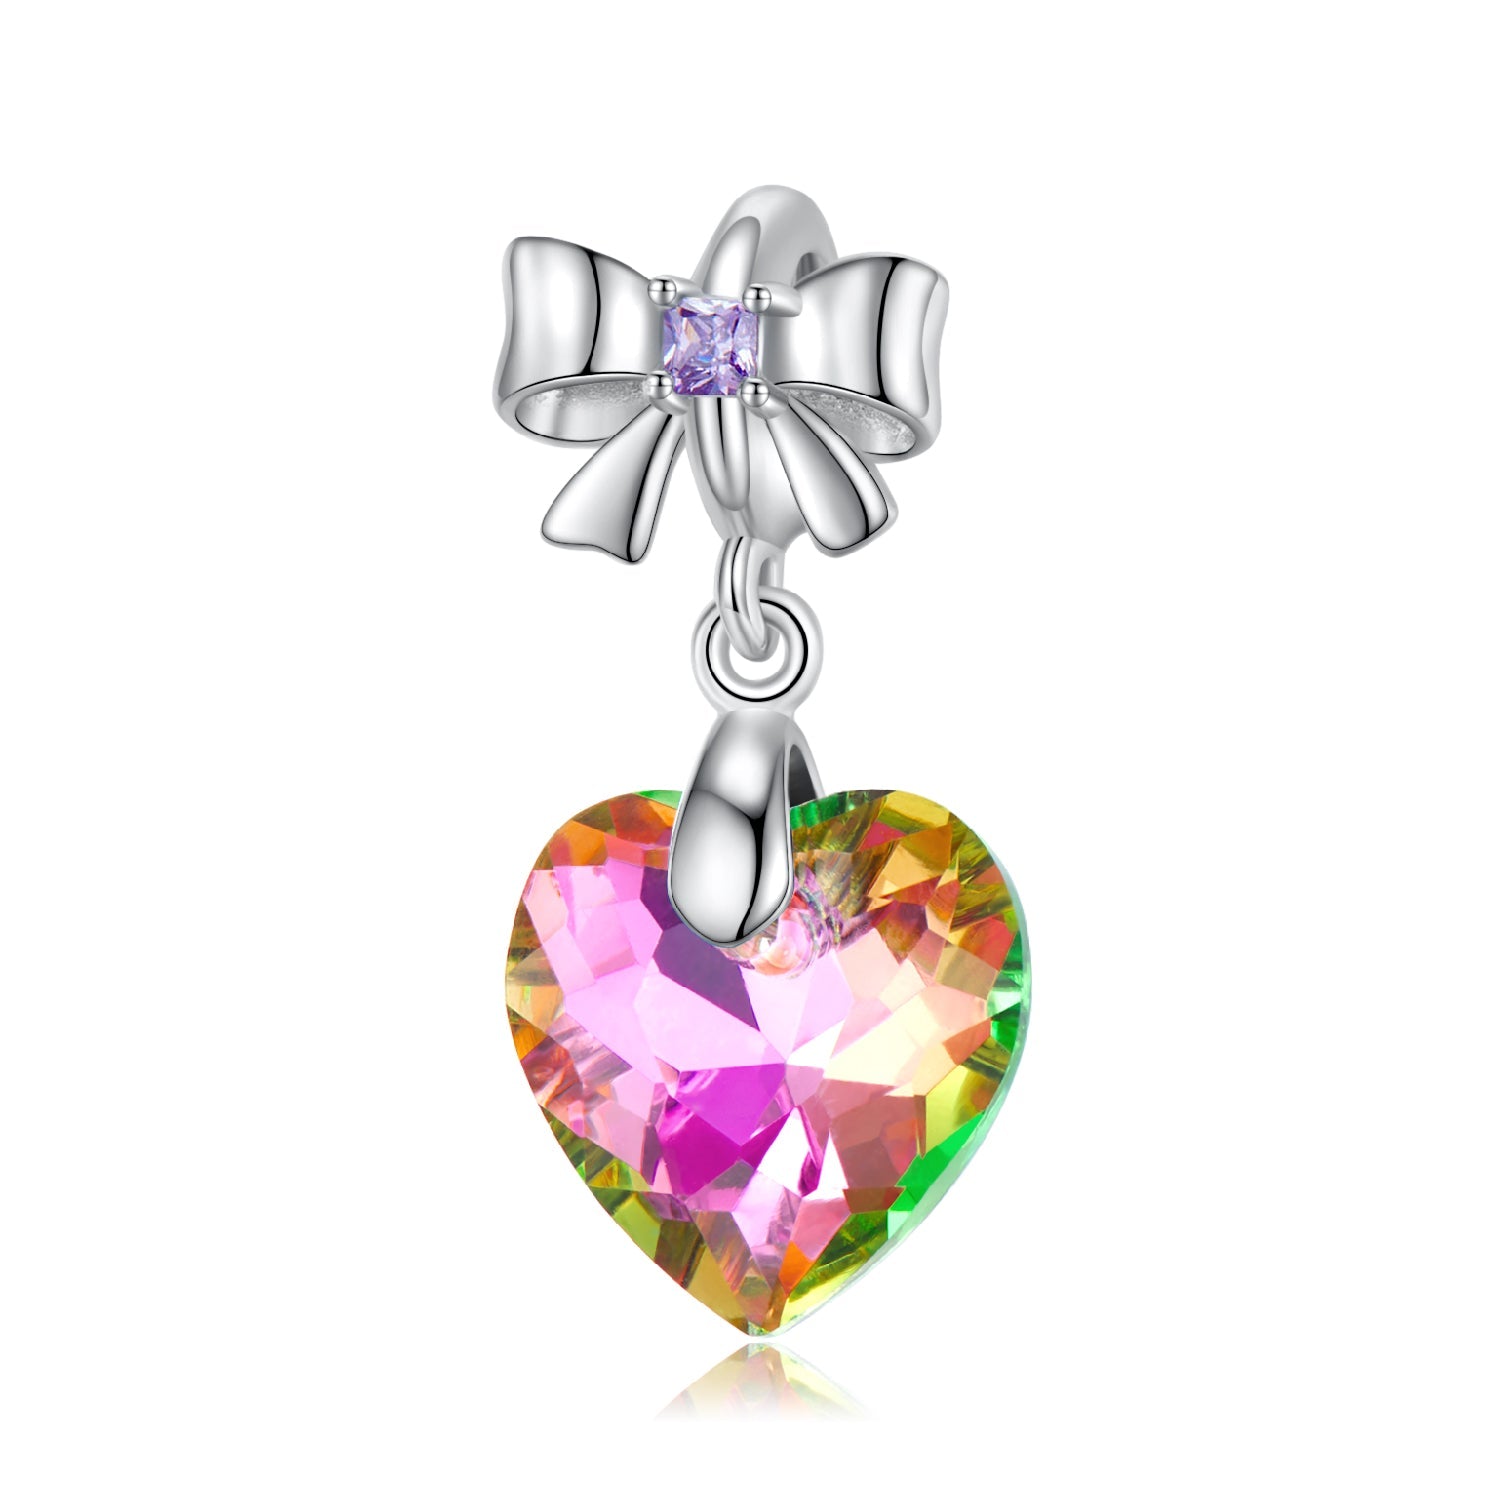 Heart gemstone necklace